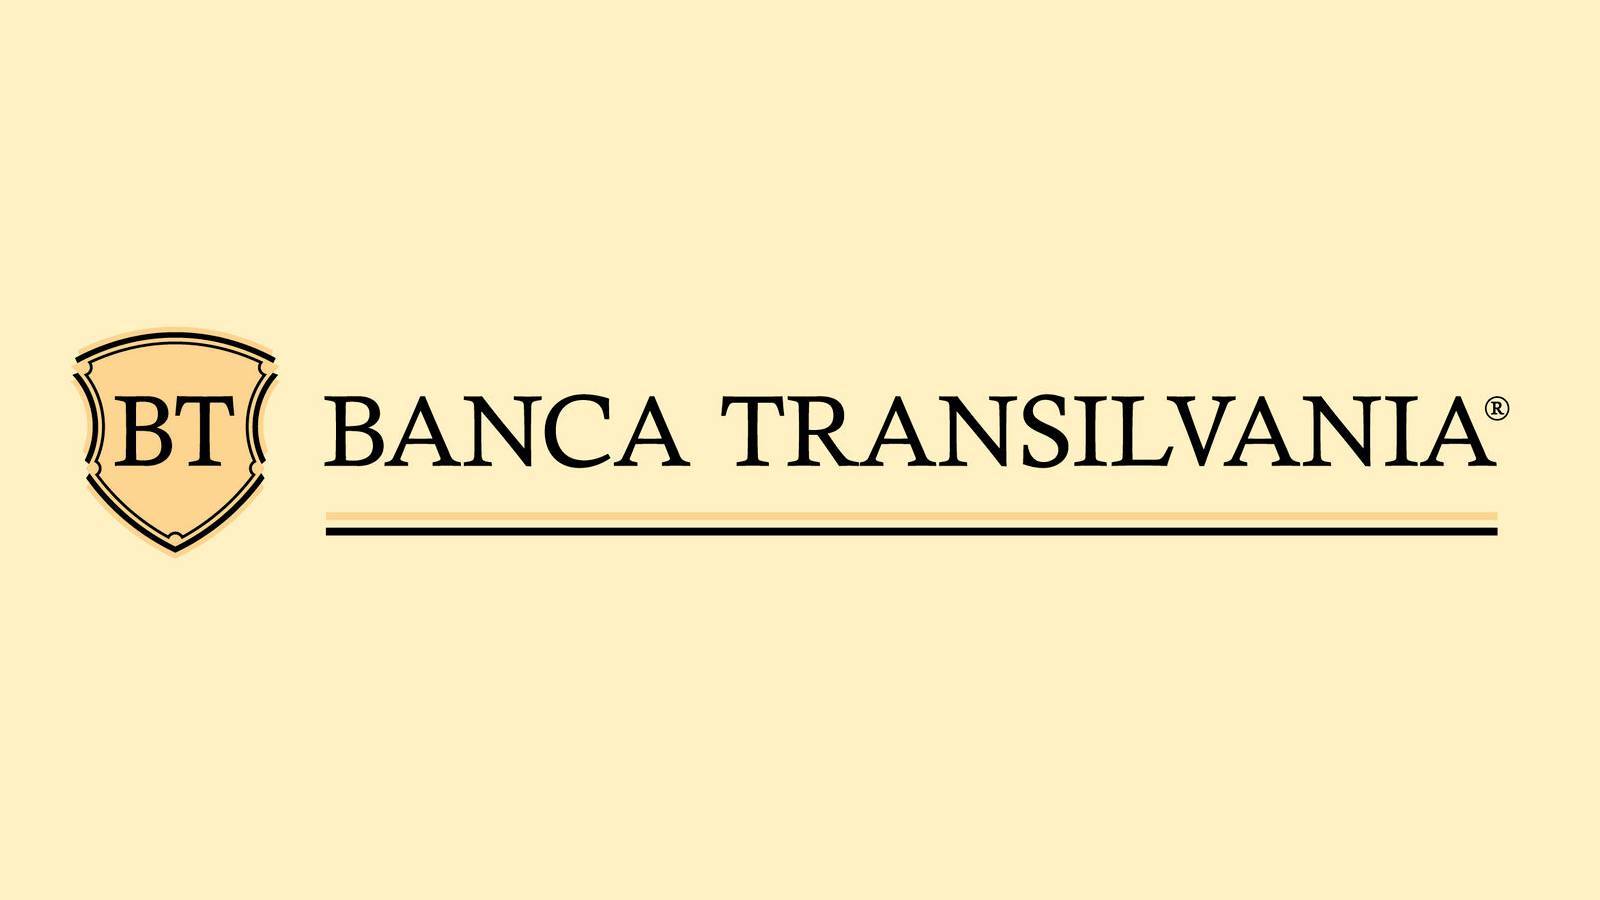 BANCA Transilvania Offizielle Maßnahmen LETZTER MOMENT Millionen rumänischer Kunden